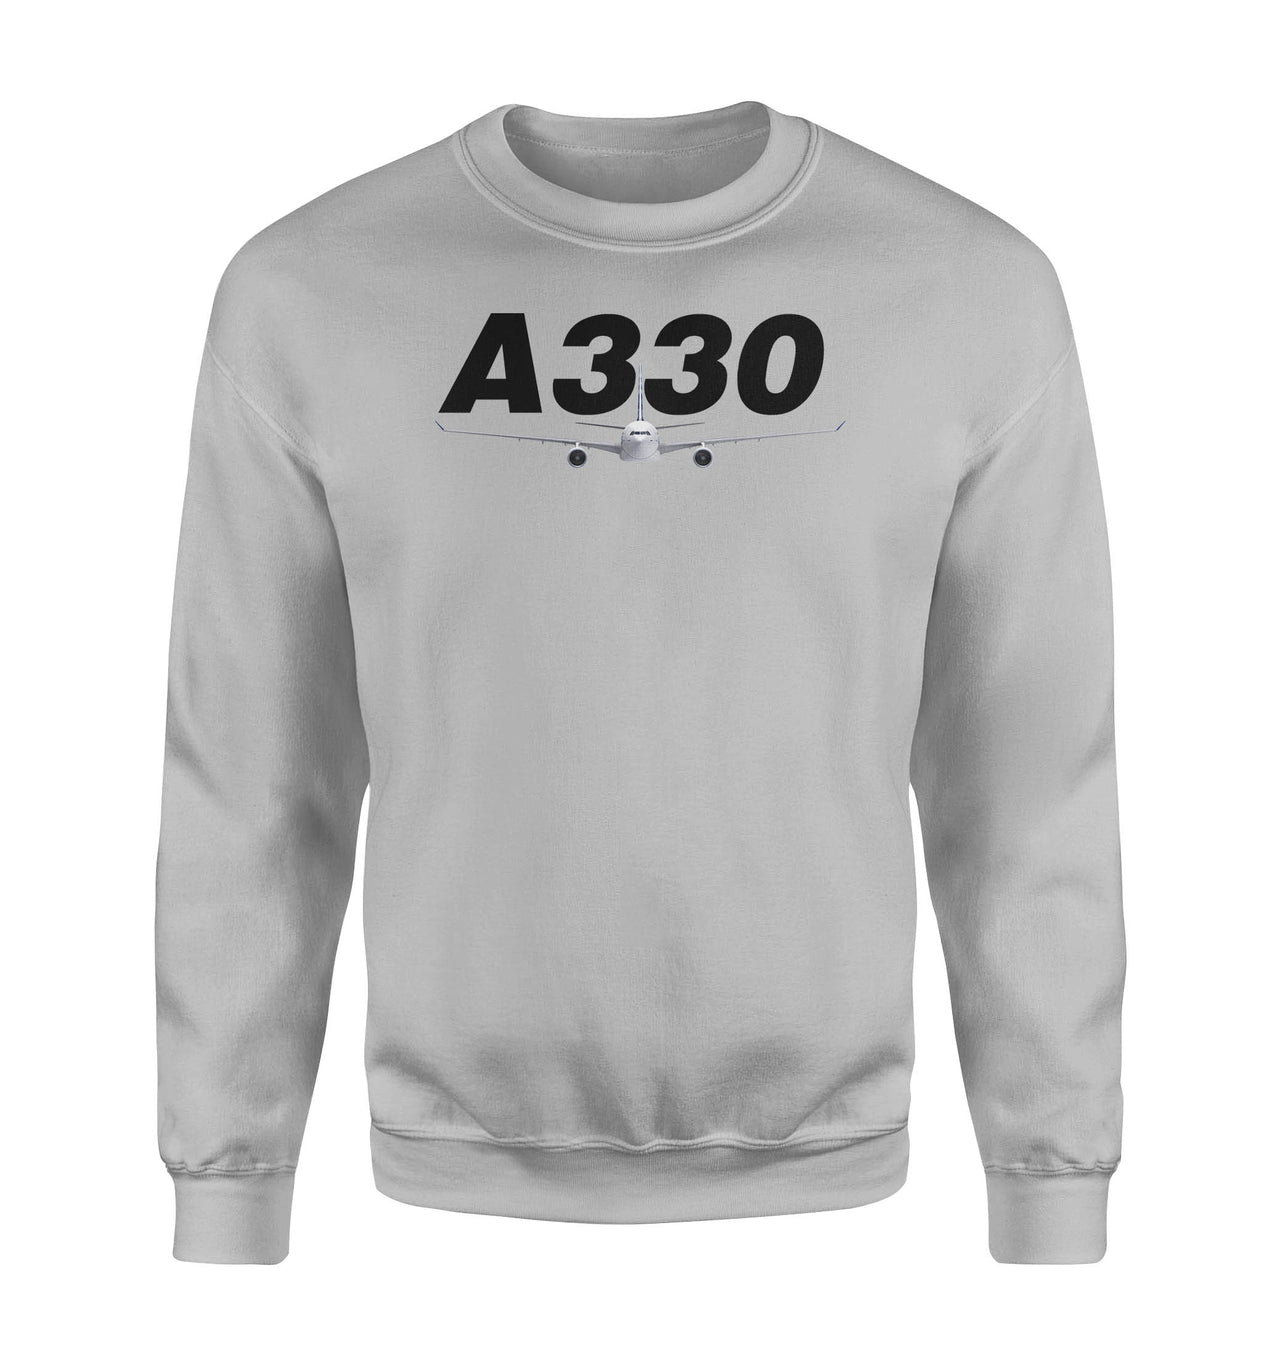 Super Airbus A330 Designed Sweatshirts